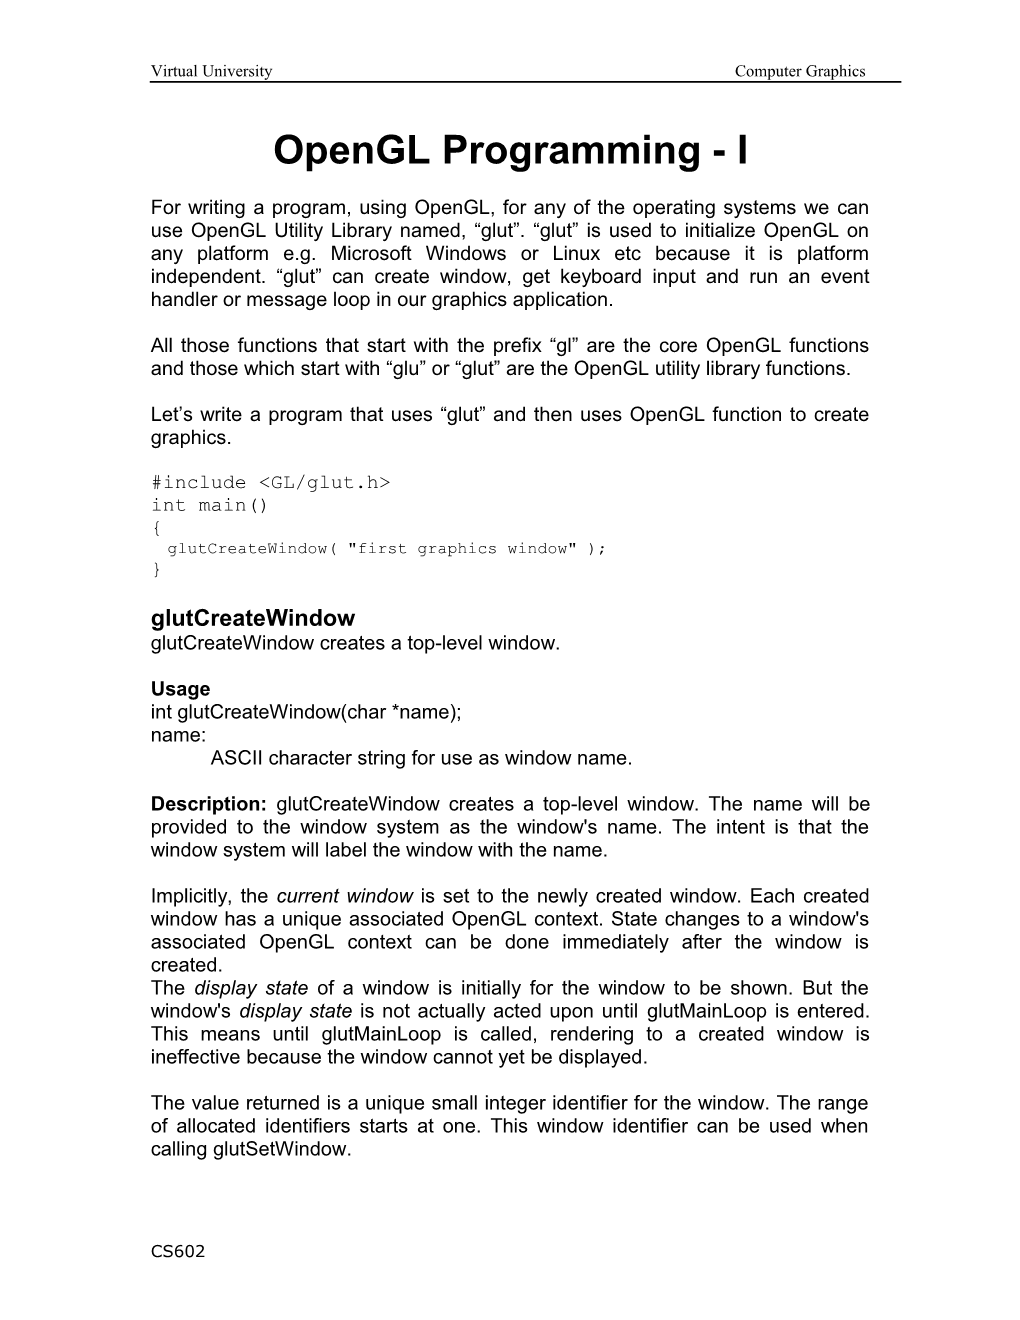 Opengl Programming - I